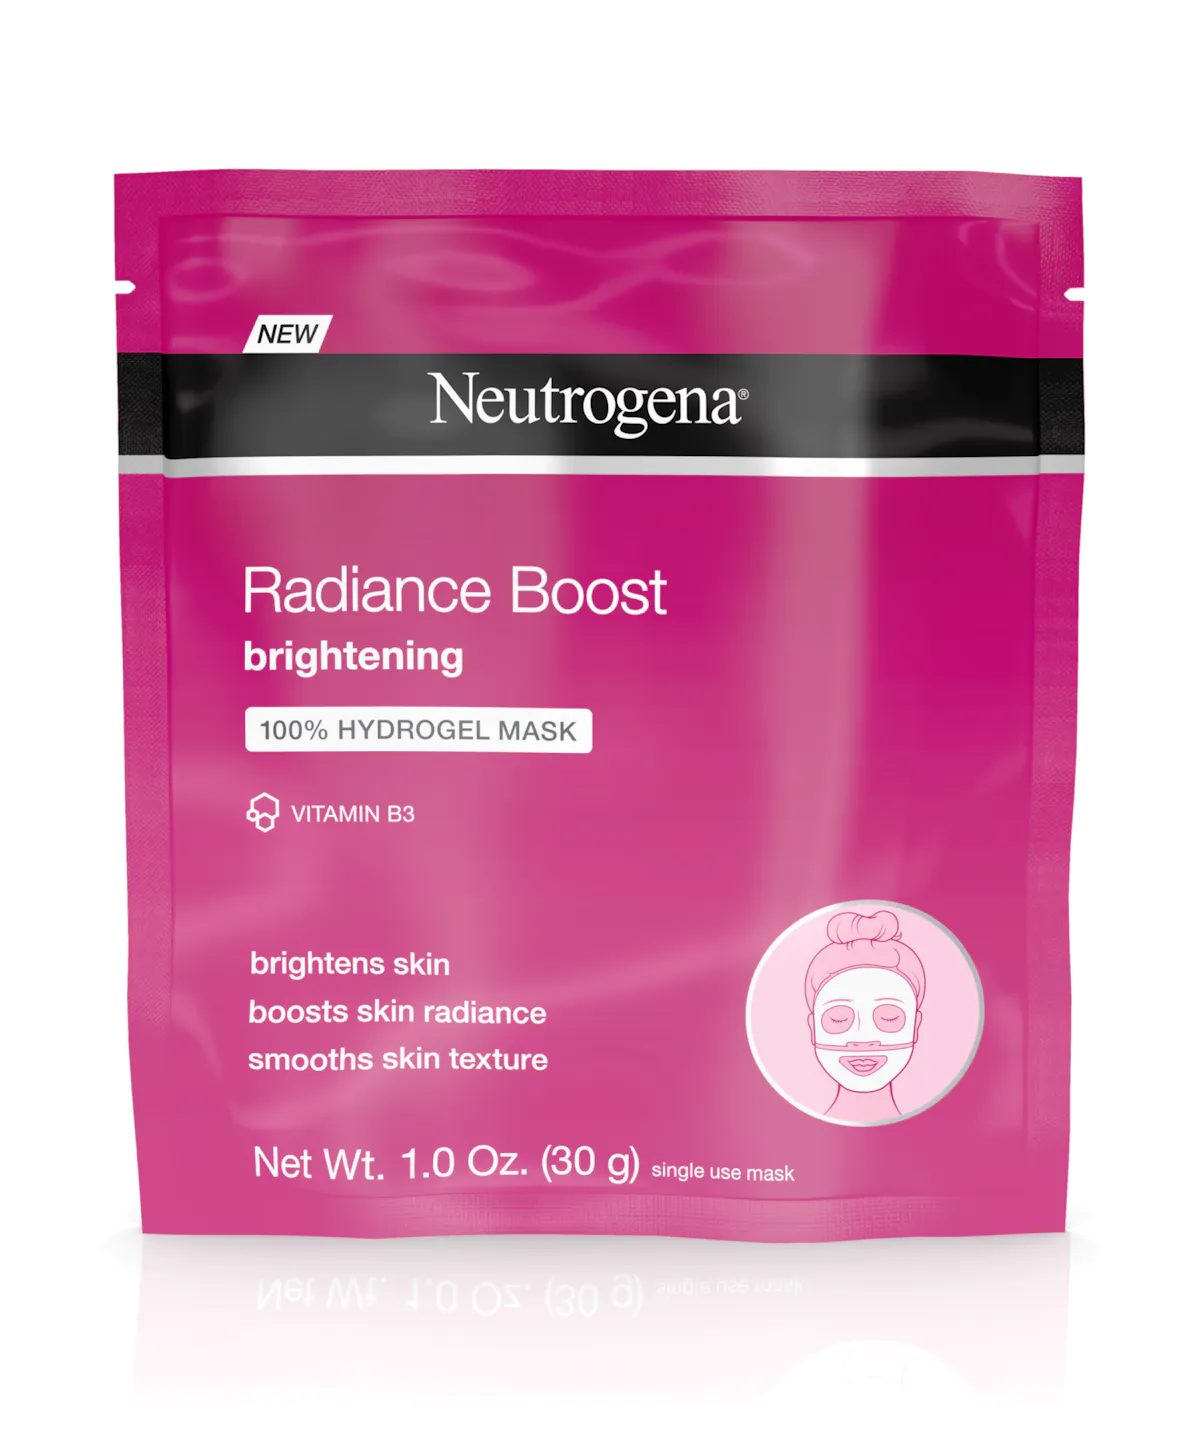 Neutrogena Radiance Boost Brighten Hydro Mask